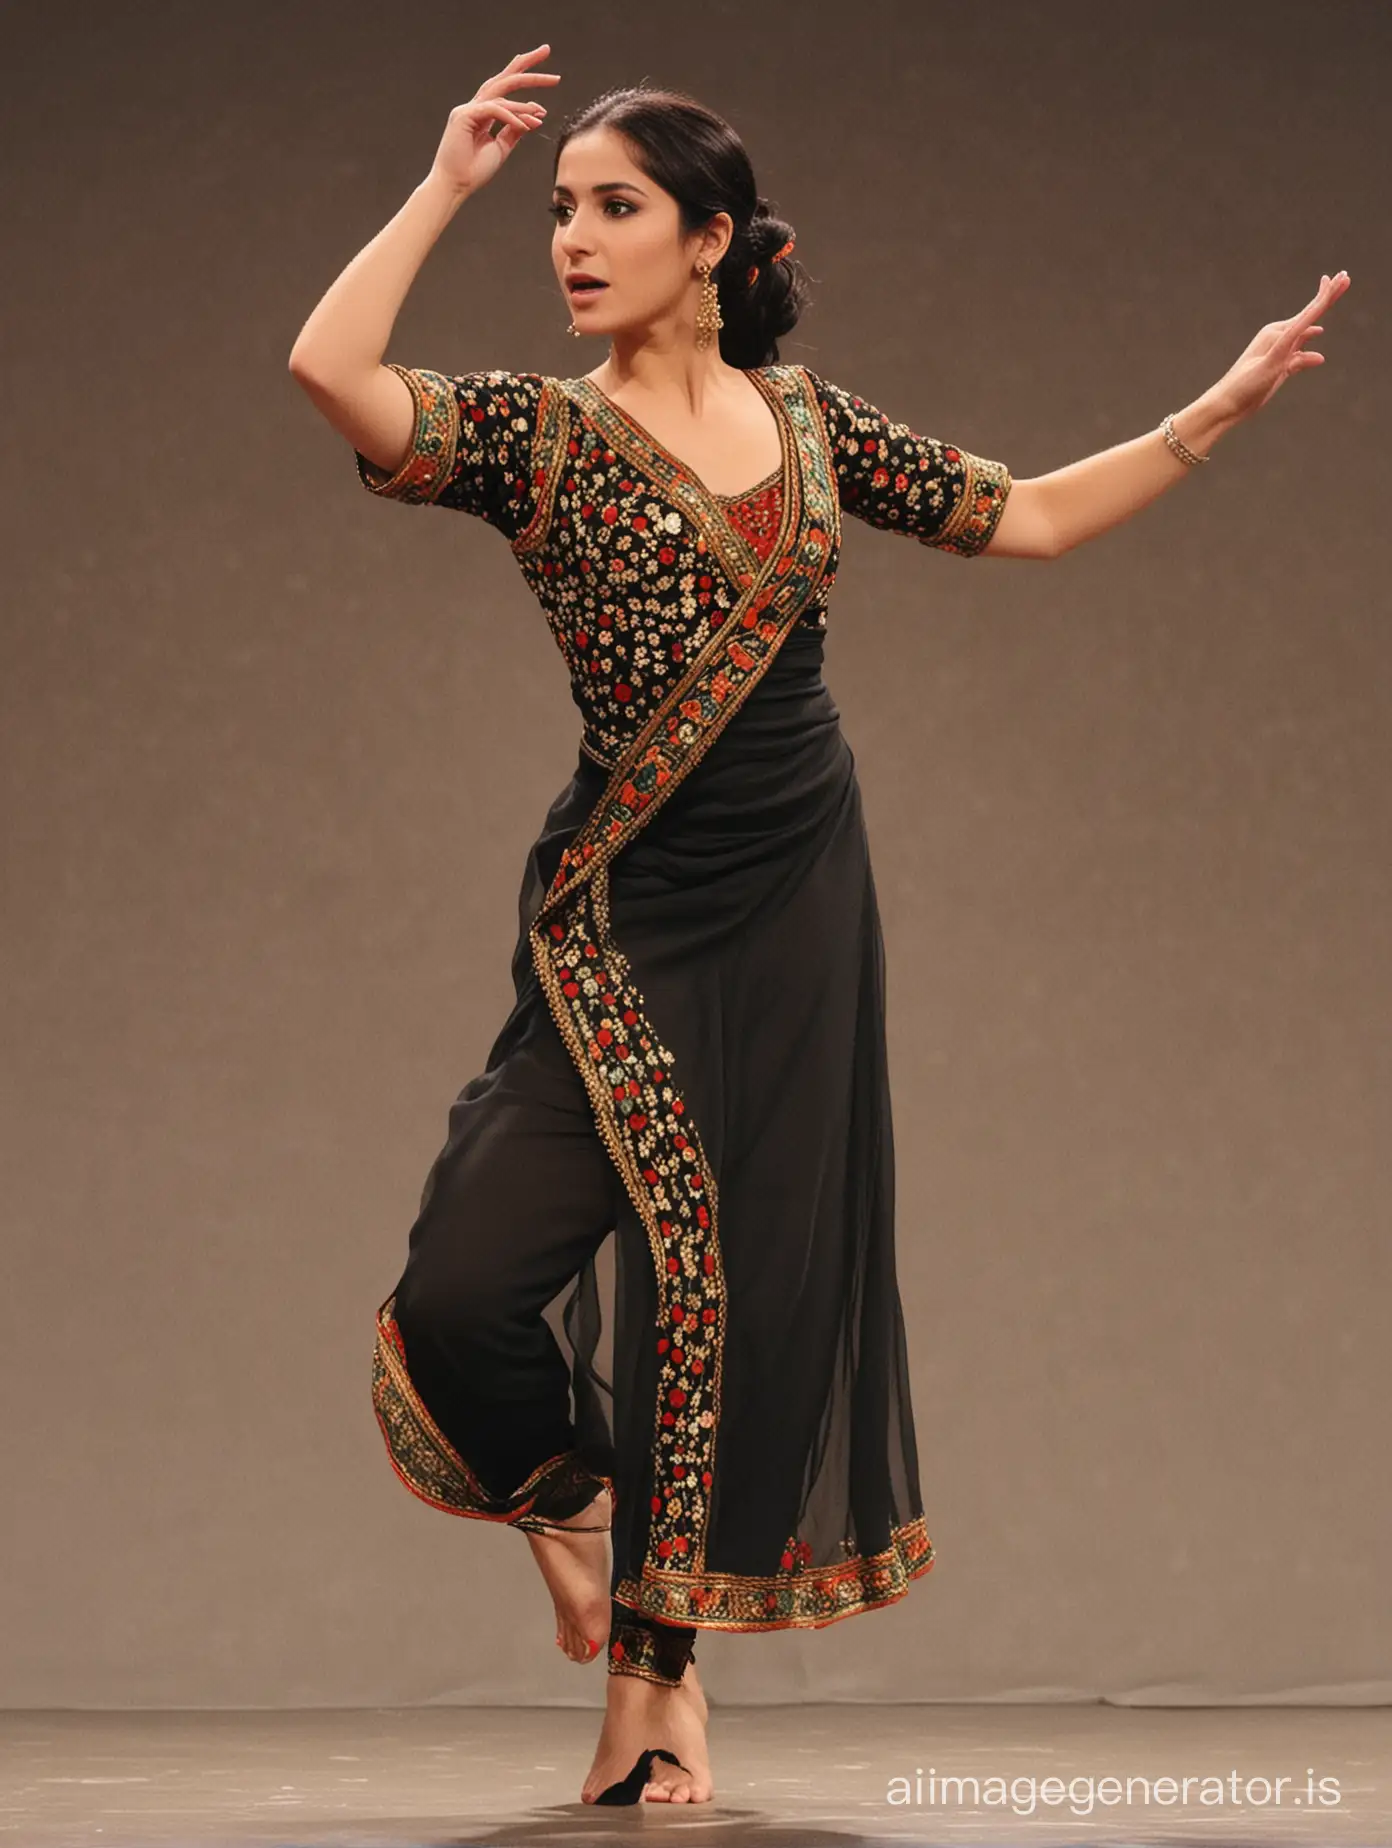 show me Ghassemabadi 
dance from Iran